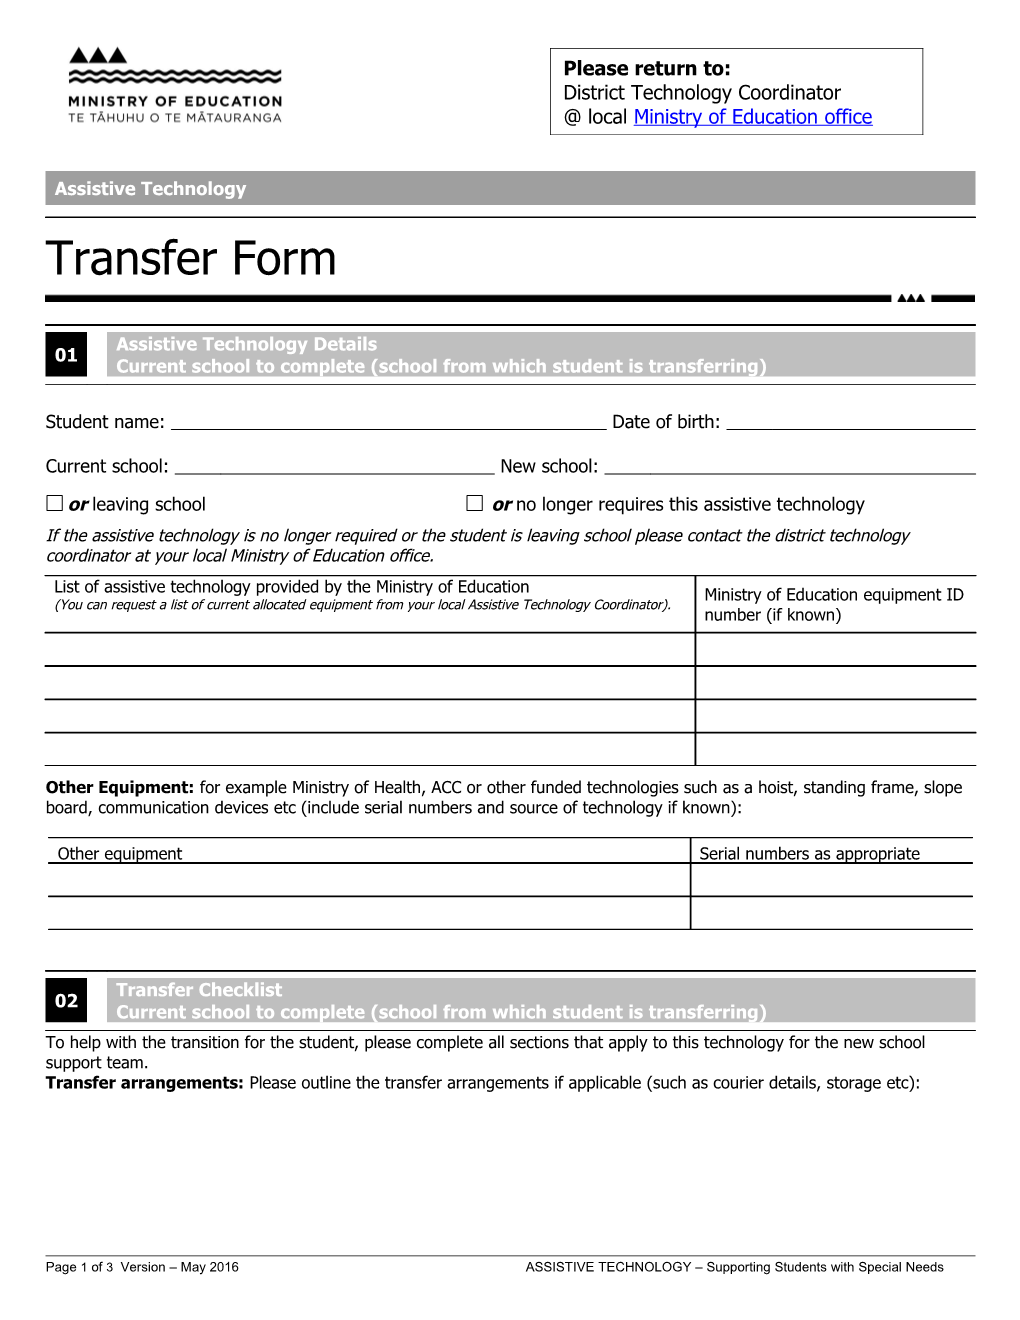 Assistive Technology Transfer Form